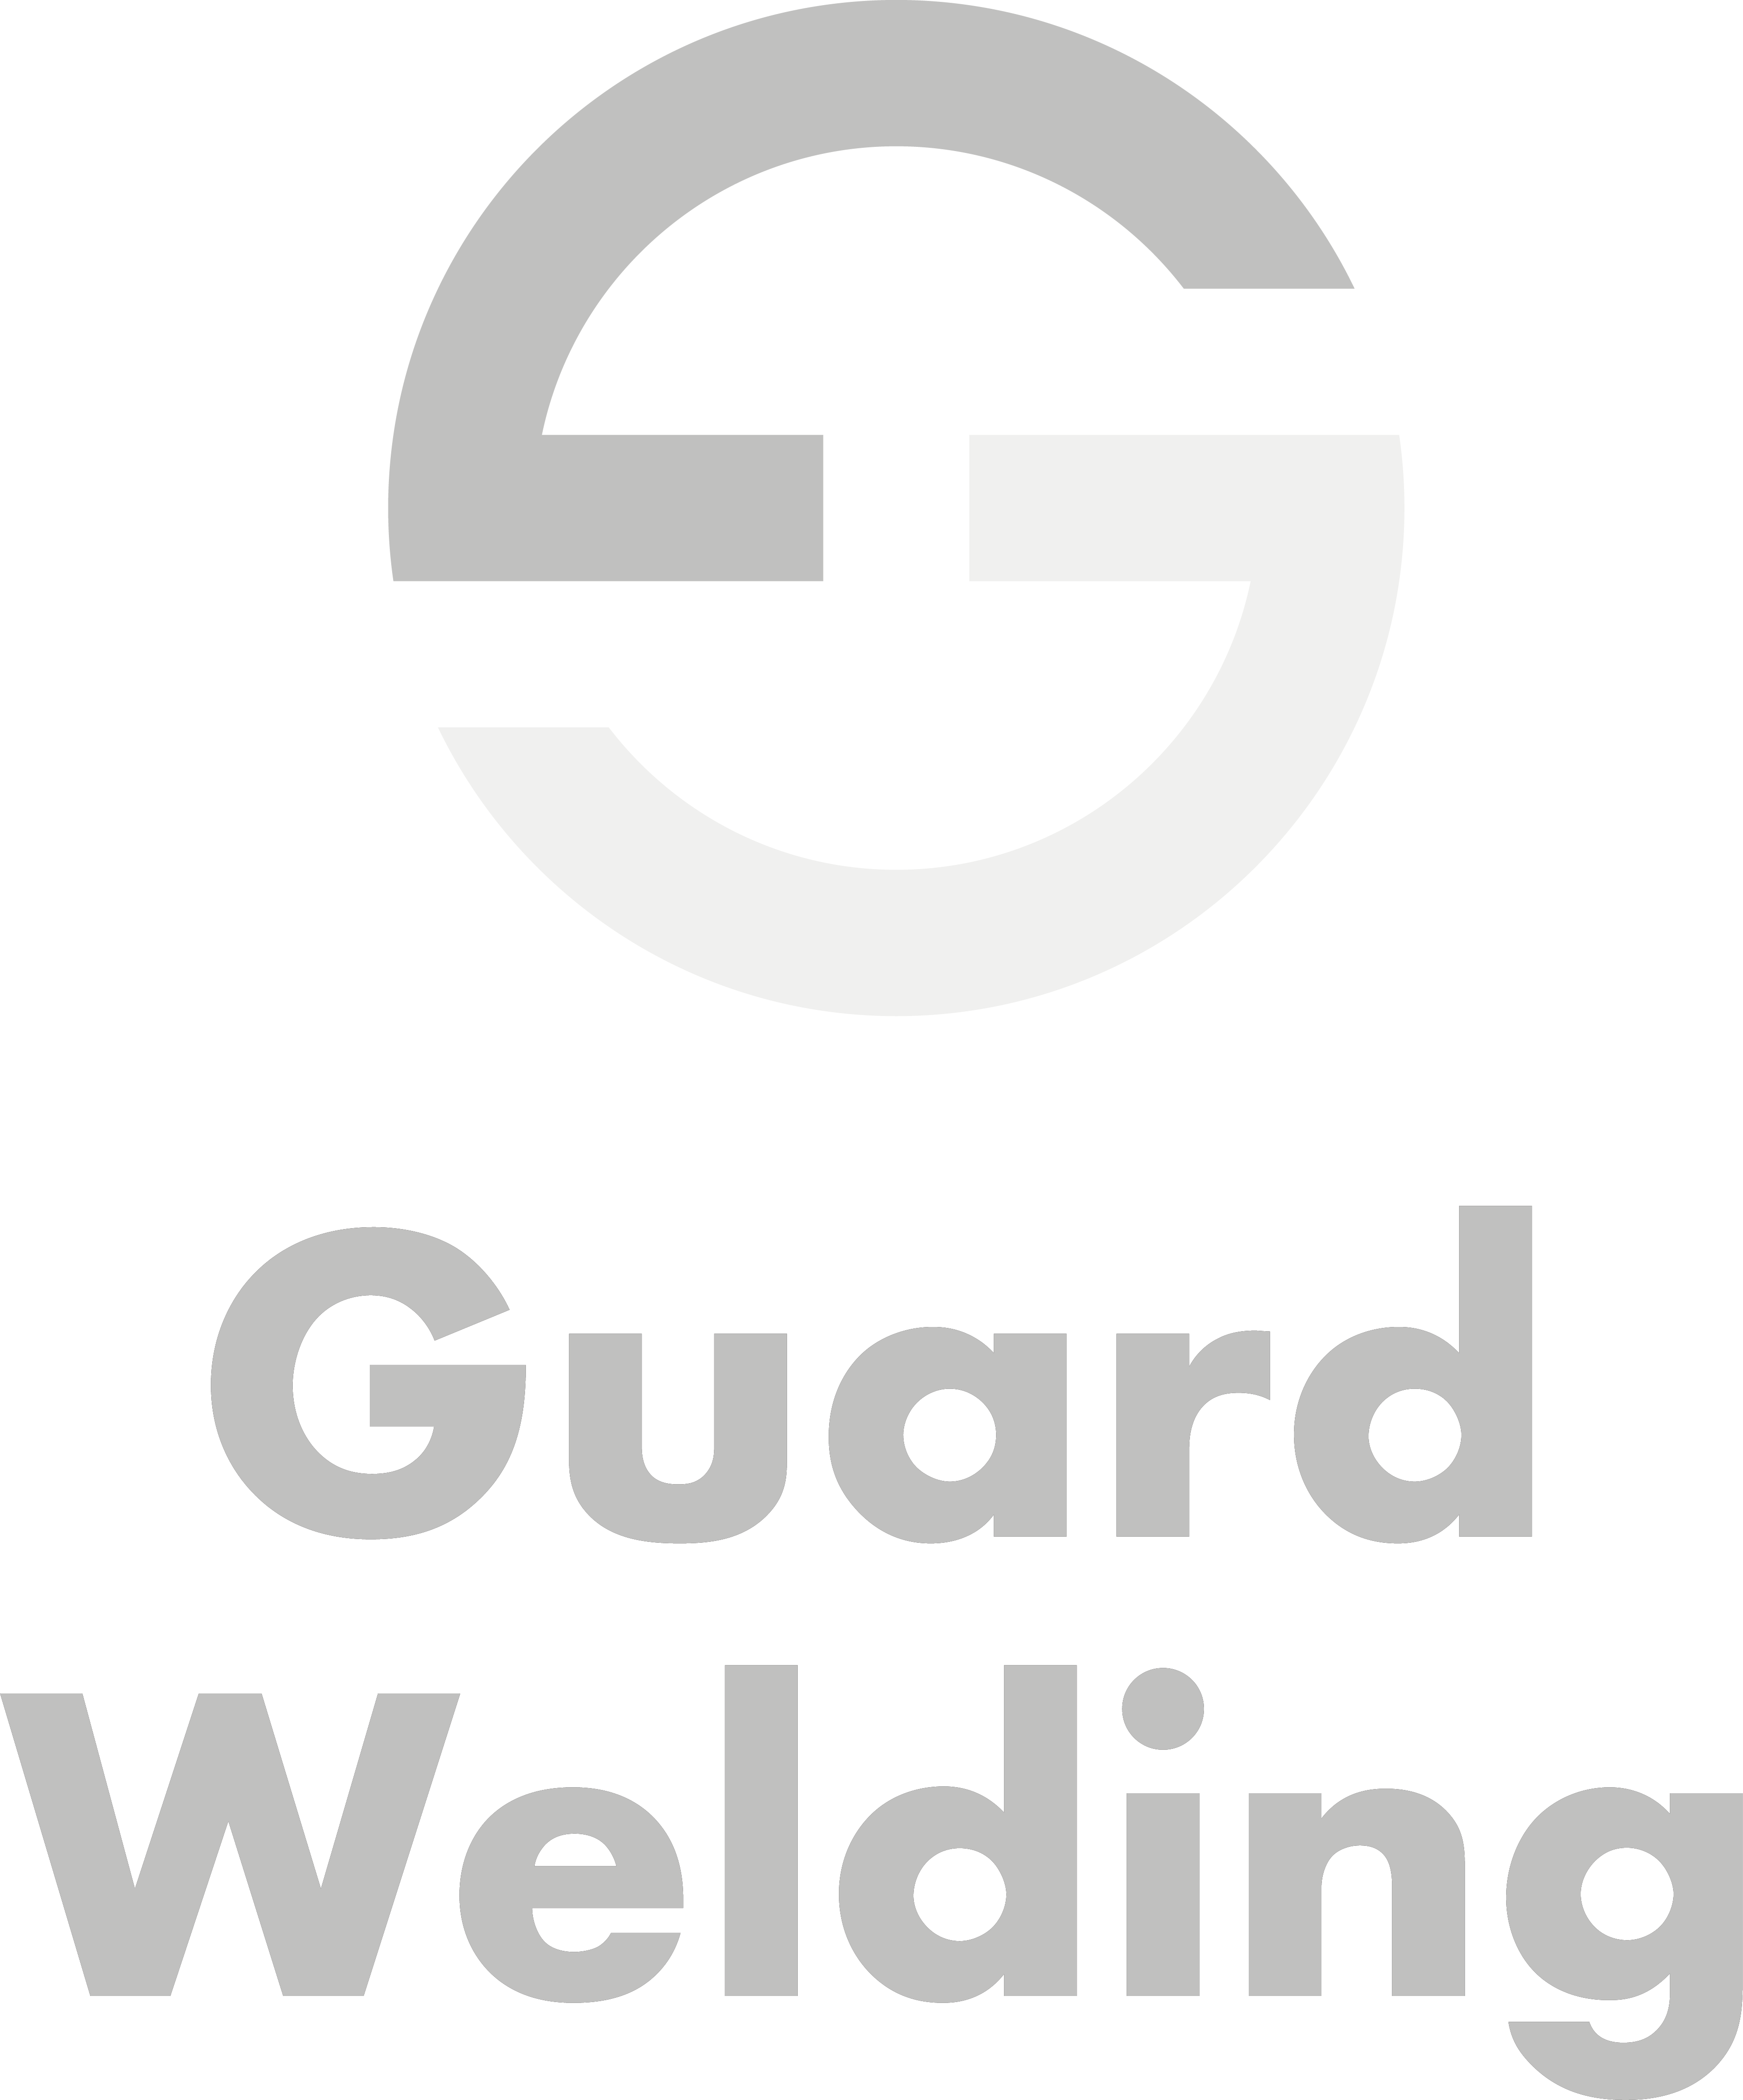 Guard Welding